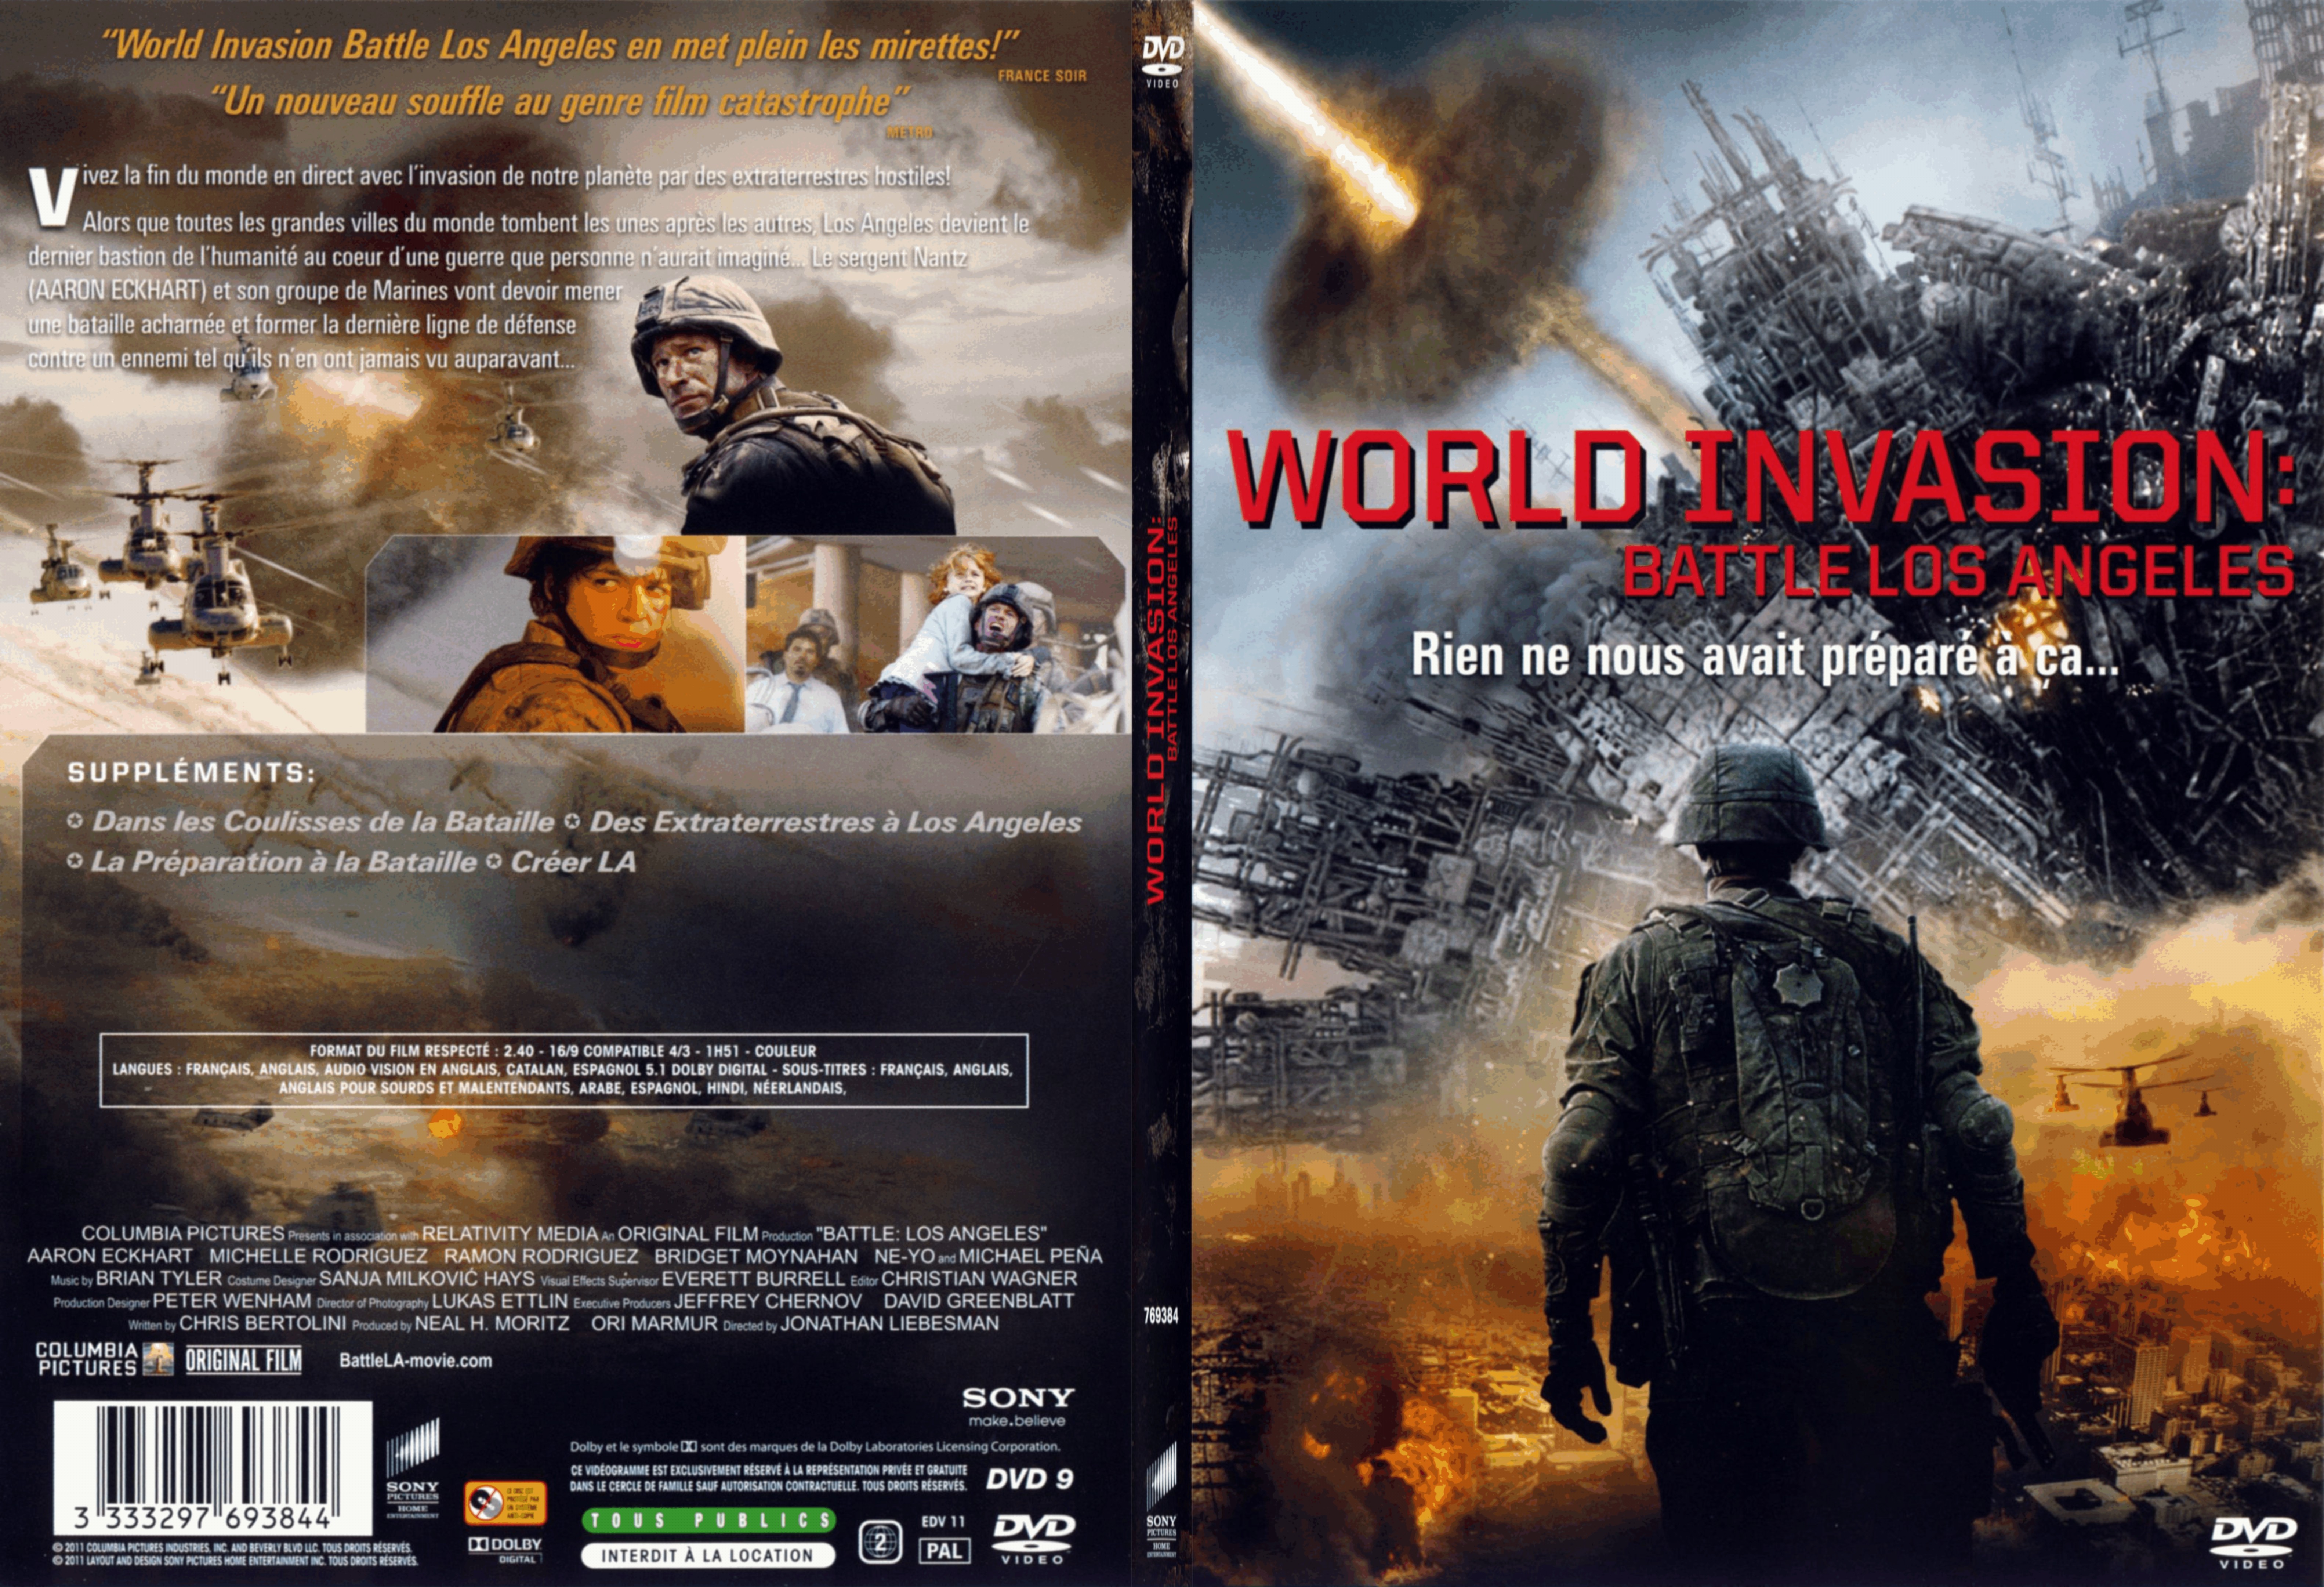 Jaquette DVD World Invasion Battle Los Angeles - SLIM